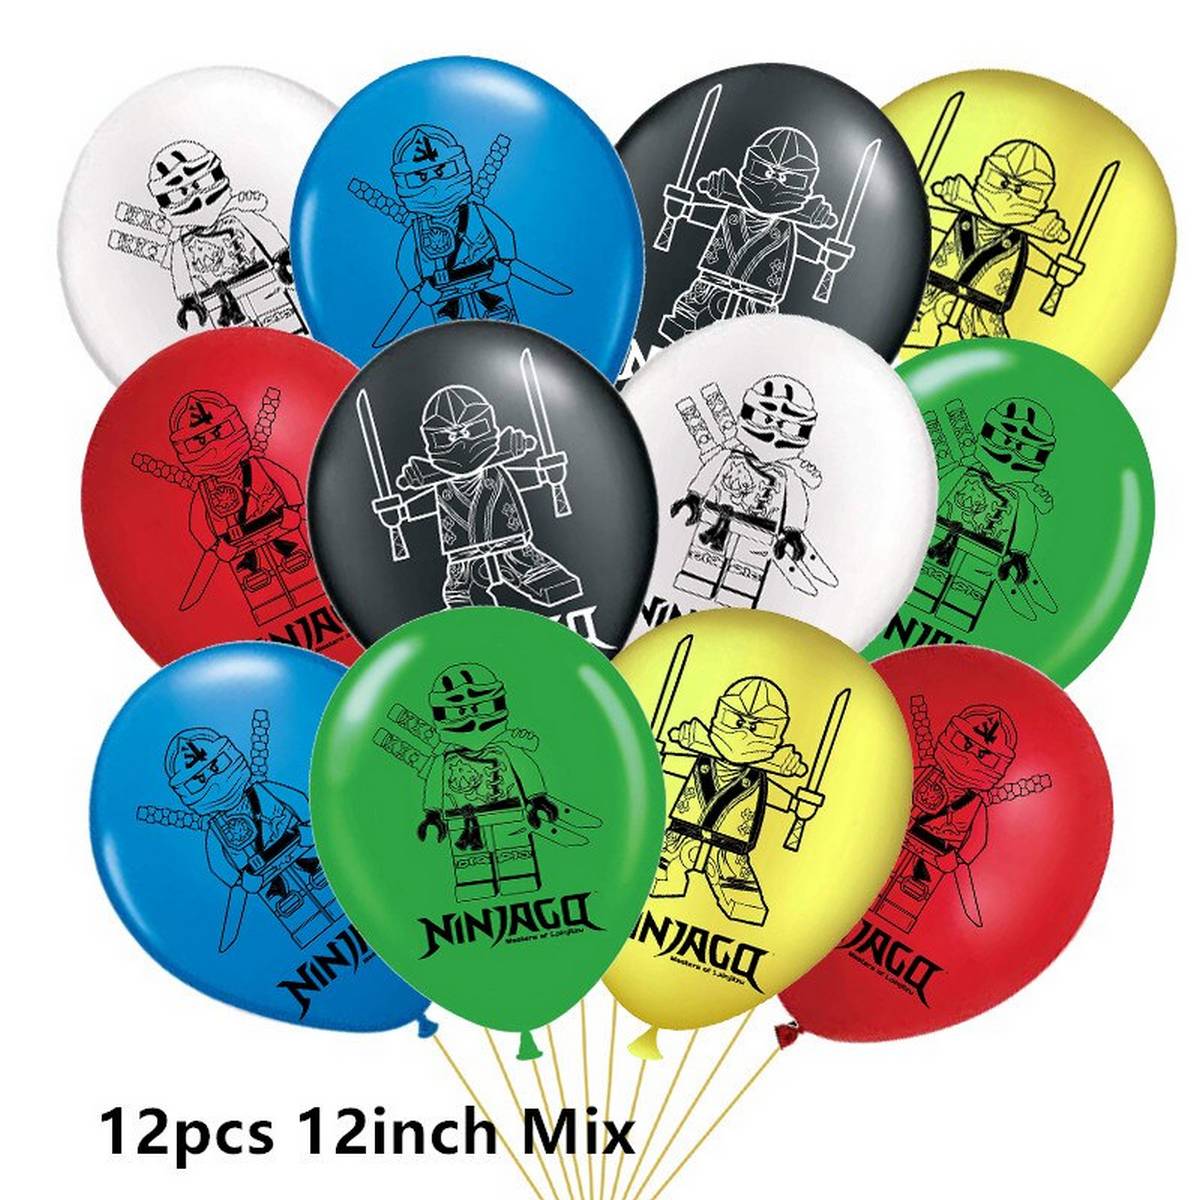 12pcs Ninjago Latex Balloons Ninja Theme Birthday Anniversaire Party Ballons Baby Shower Decoration Boys Kids Toy Supplie Globos Balloons Craft Supplies Tools Keyforrest Lt